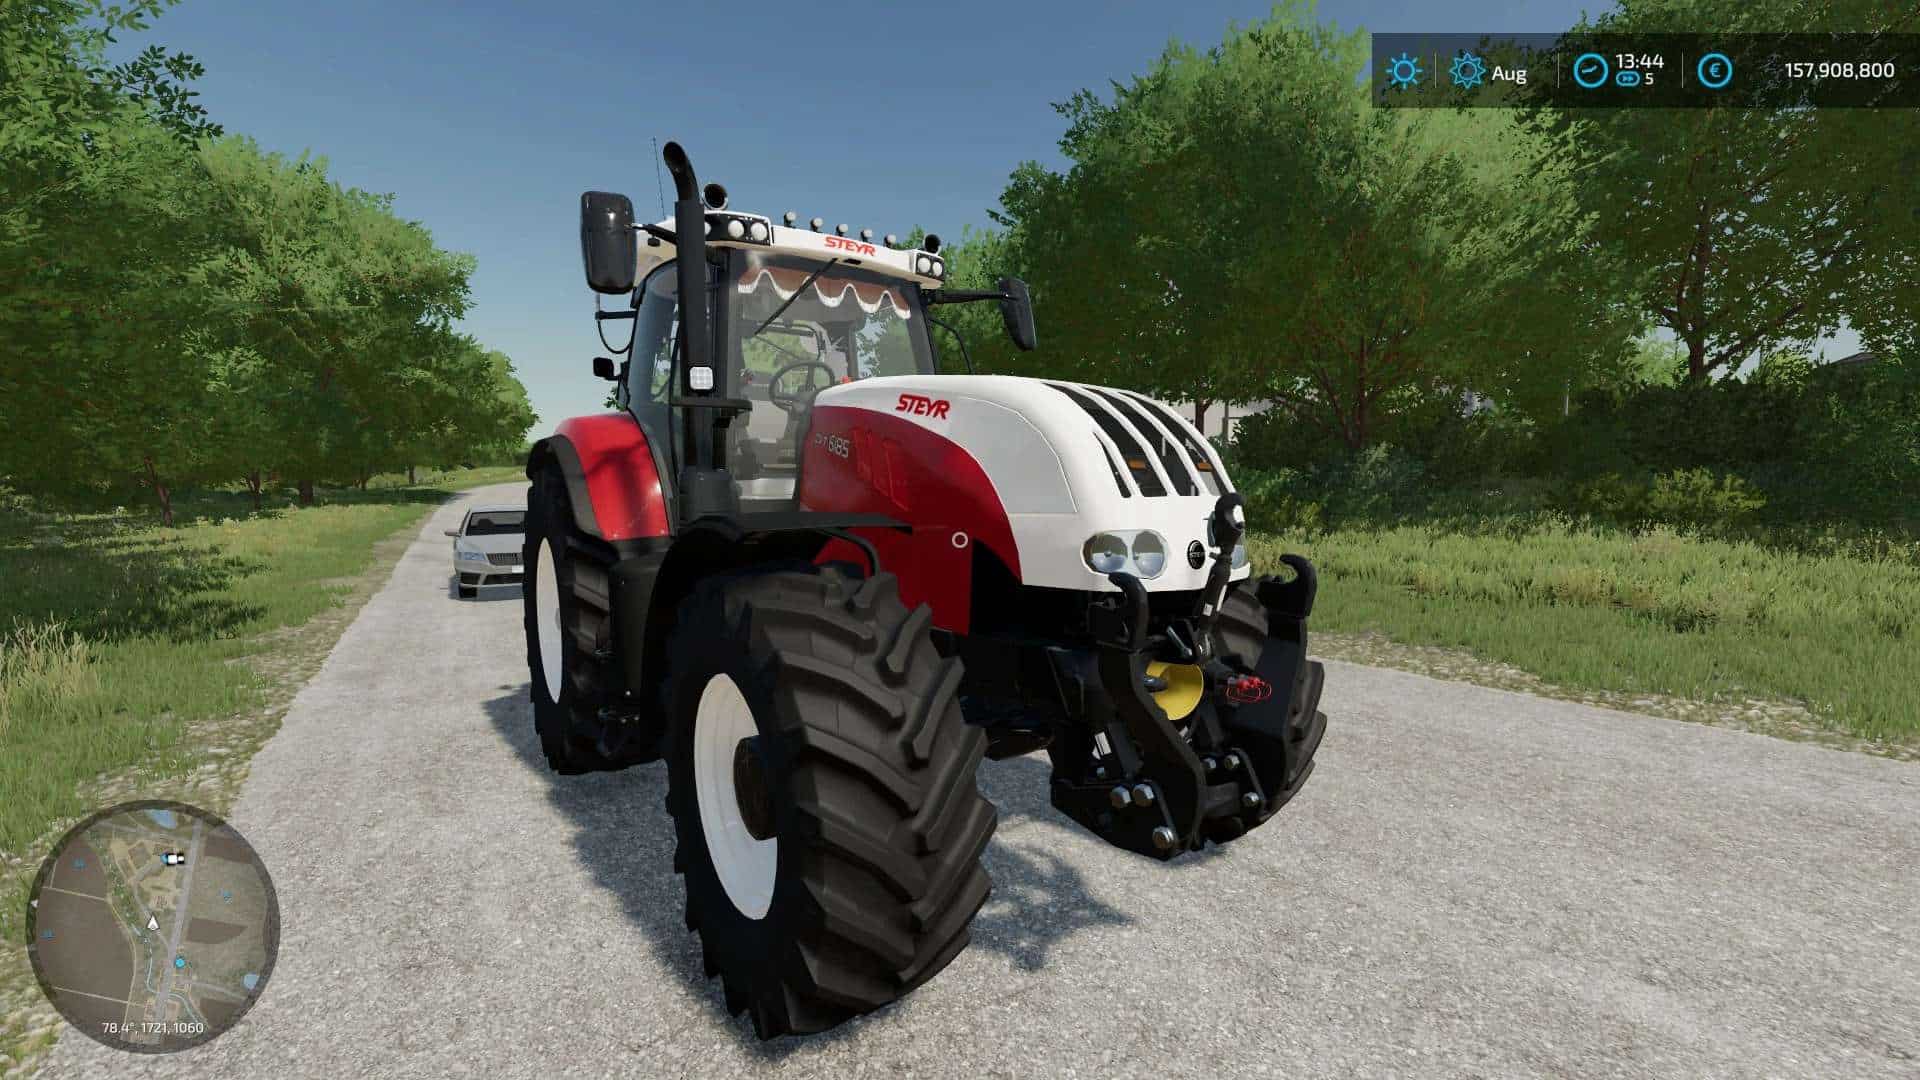 Fs22 Steyr Cvt Edit V100 7 Farming Simulator 19 17 15 Mod 9866